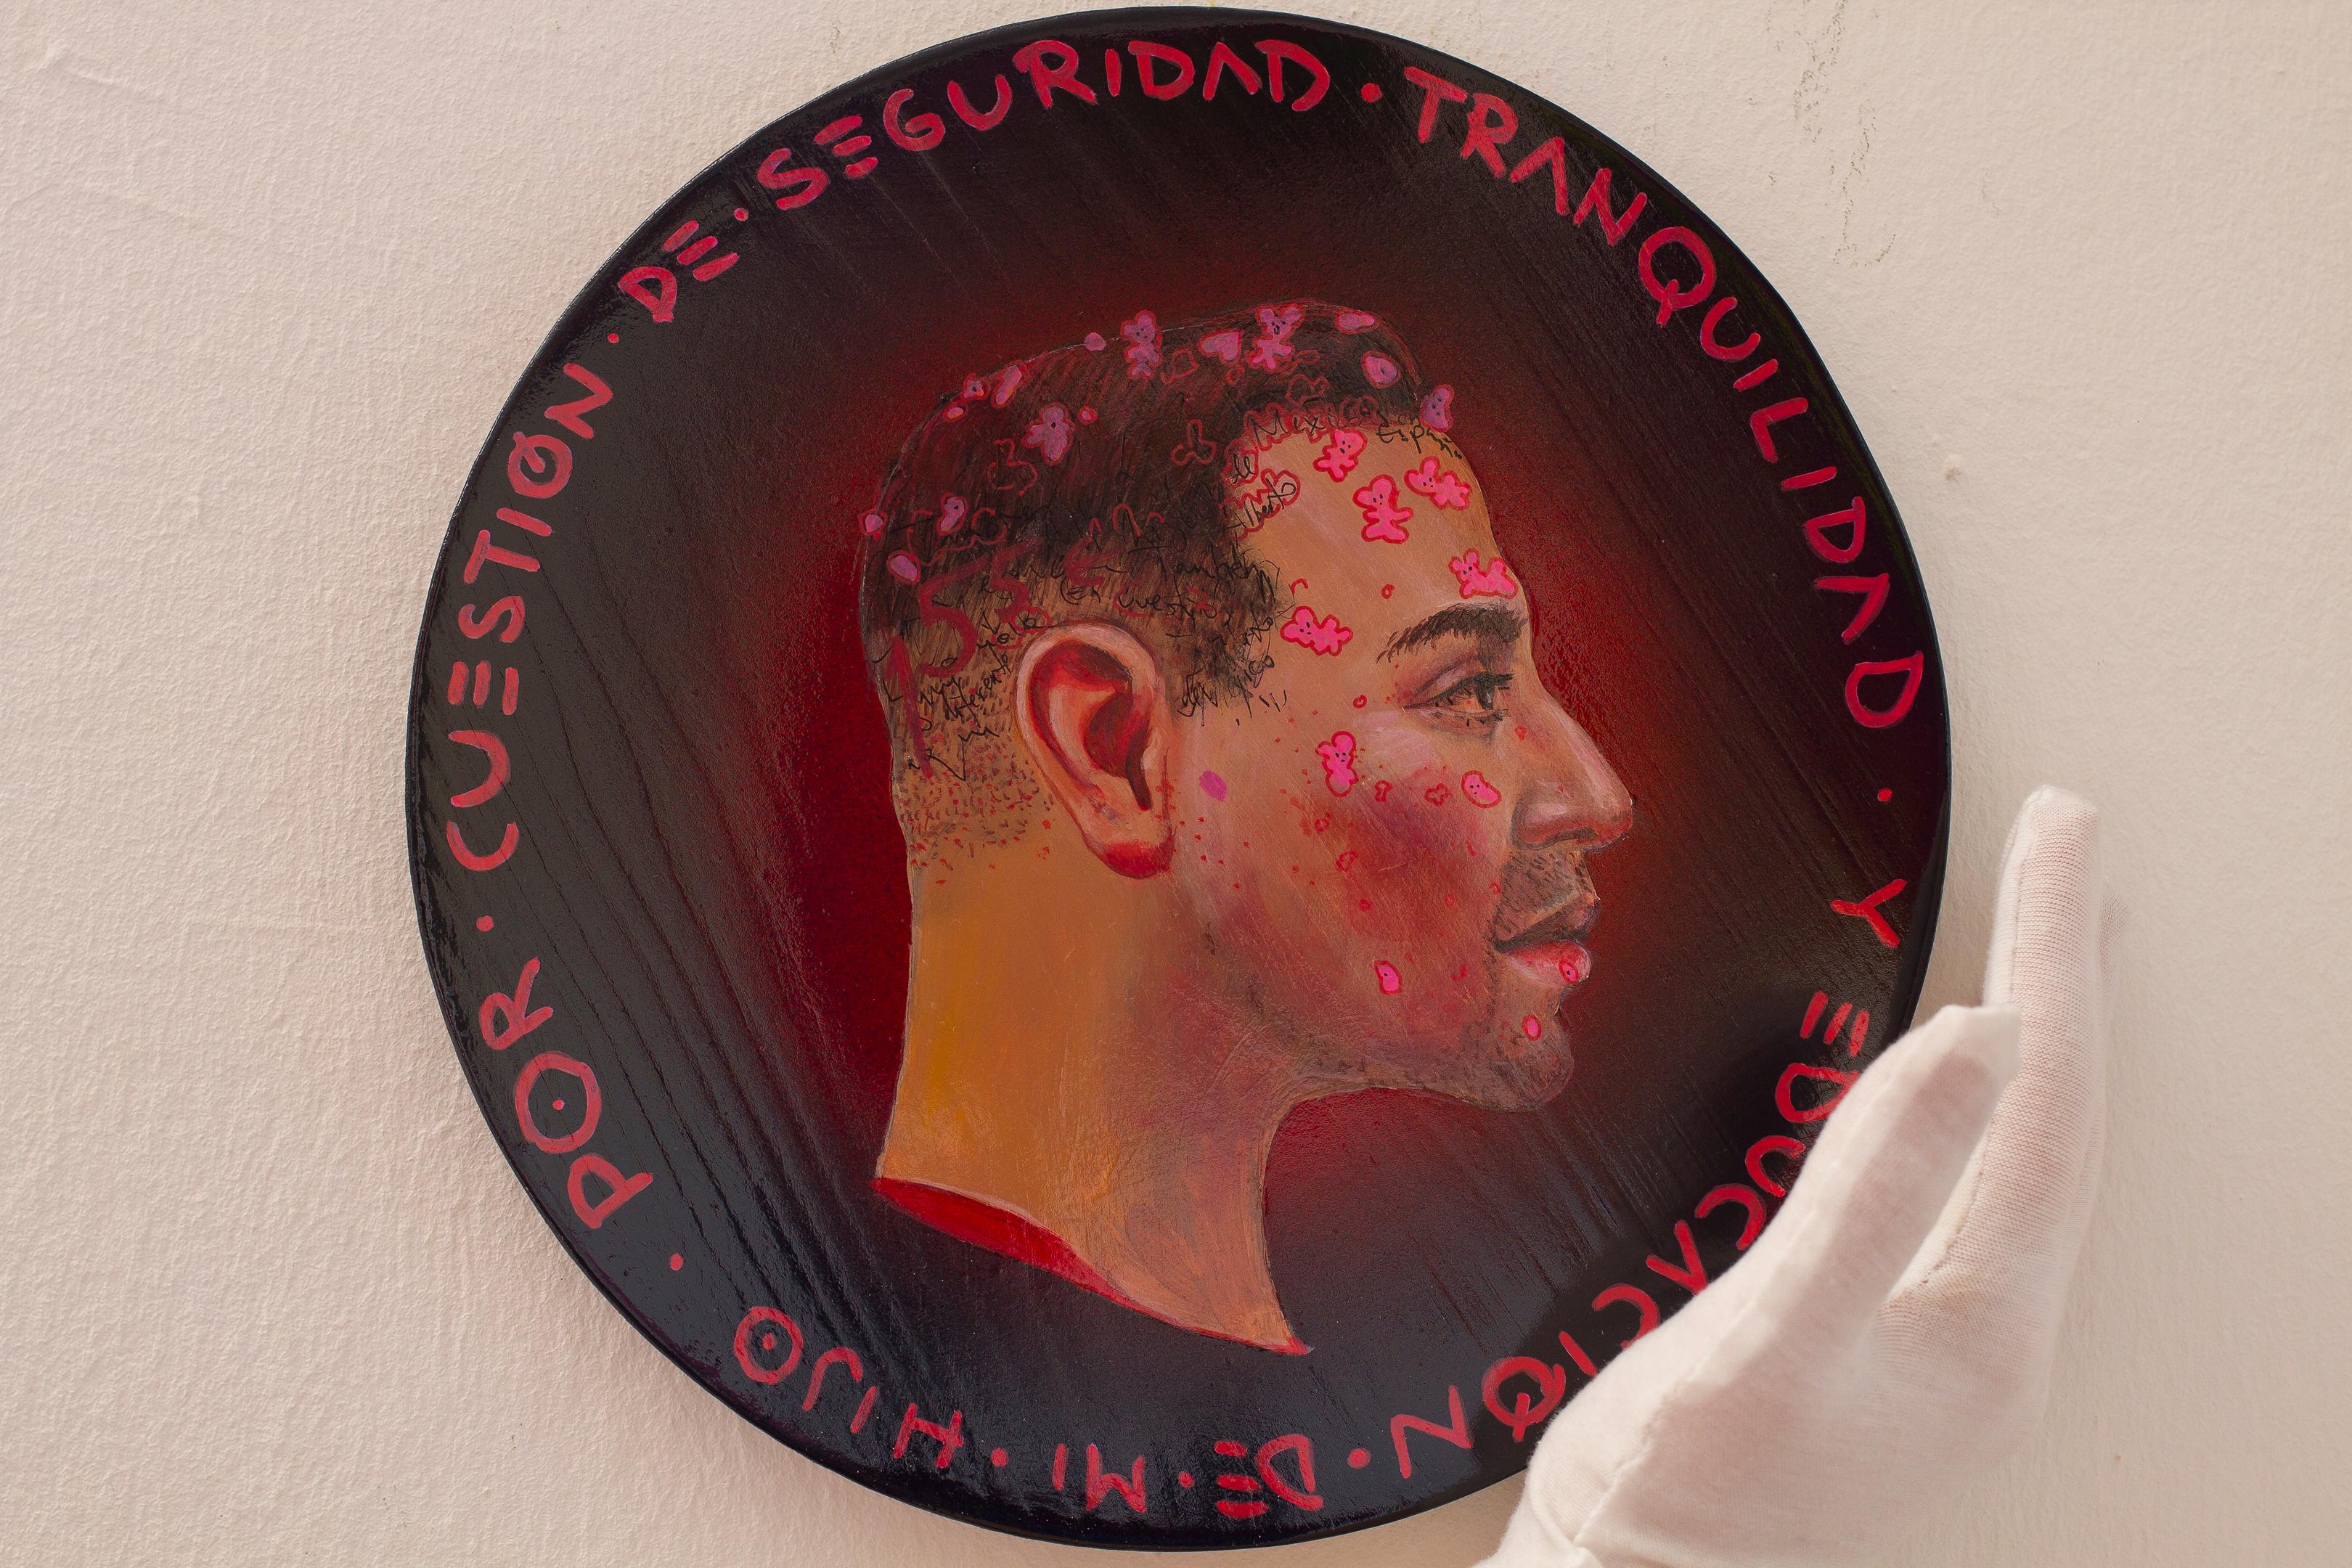 Black and red background. Latin Male Side Profile Portrait Currency #187 - Pop Art Mixed Media Art by Natasha Lelenco